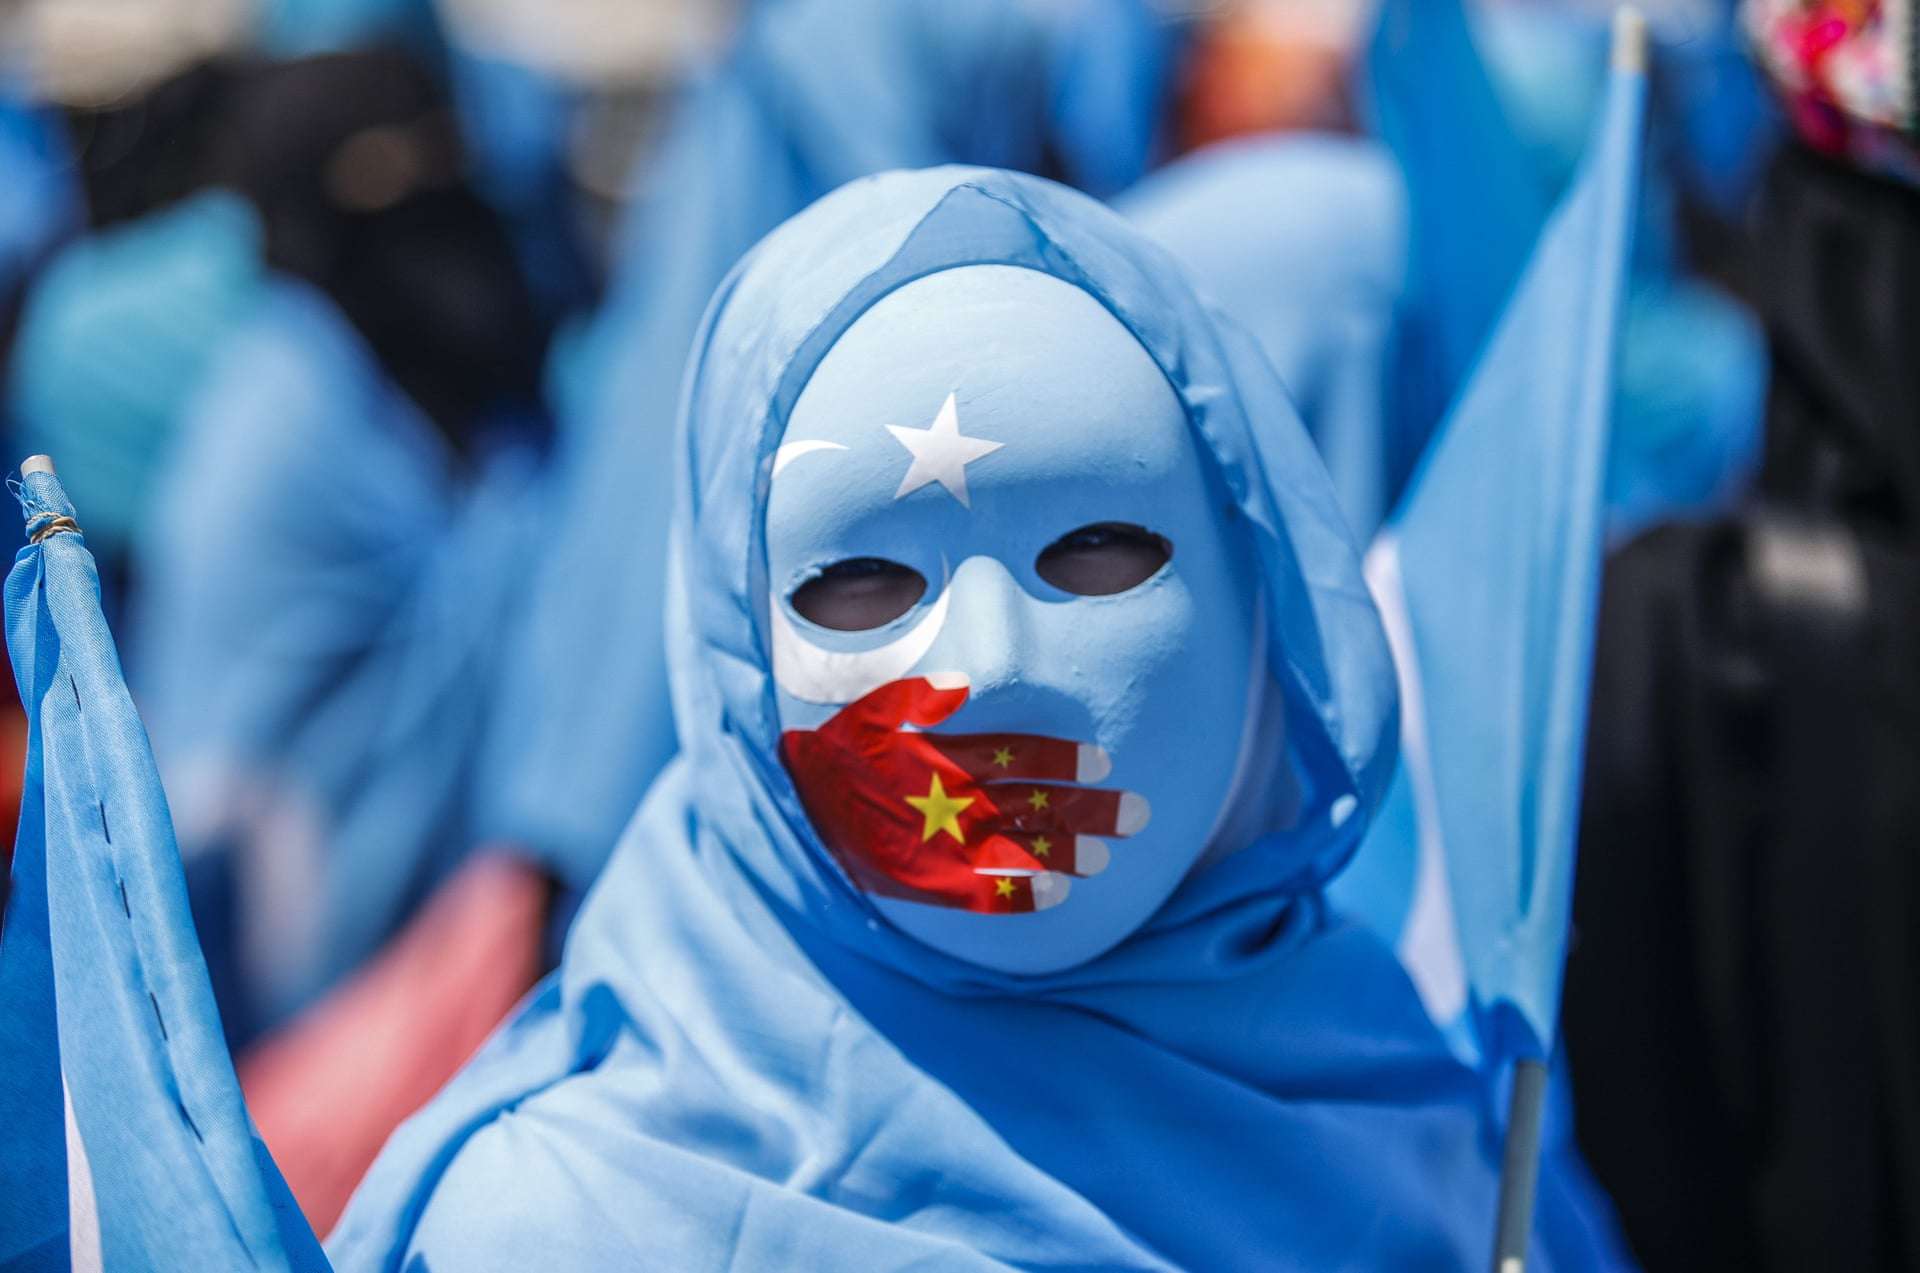 China slams Britain’s comments on Uyghurs as ‘slander’